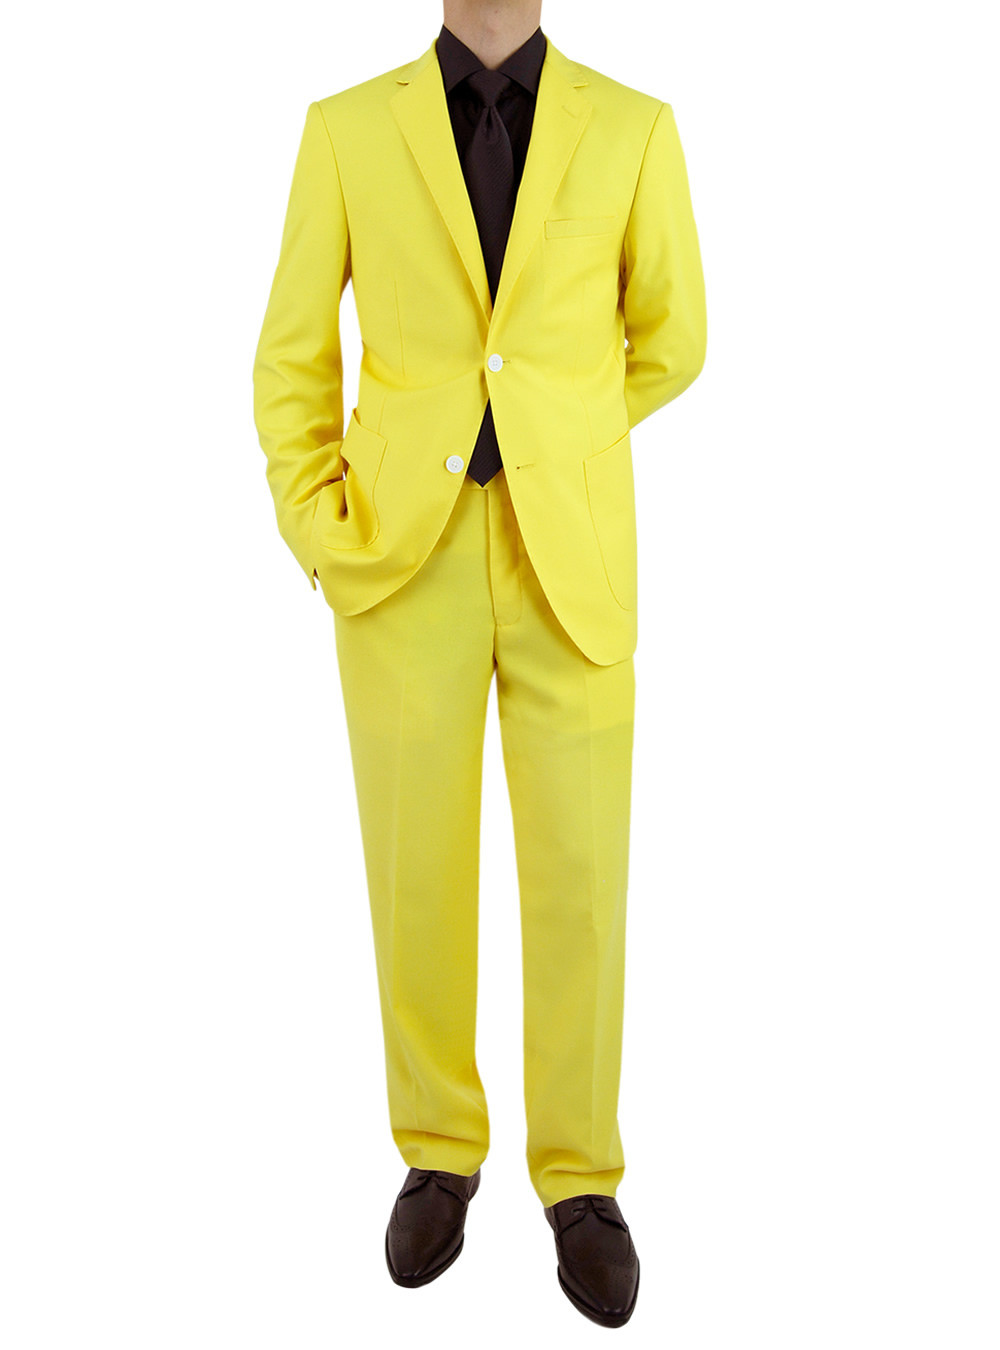 Mens Yellow 2 Button suit separates by Salvatore Exte - Fashion Suit Outlet